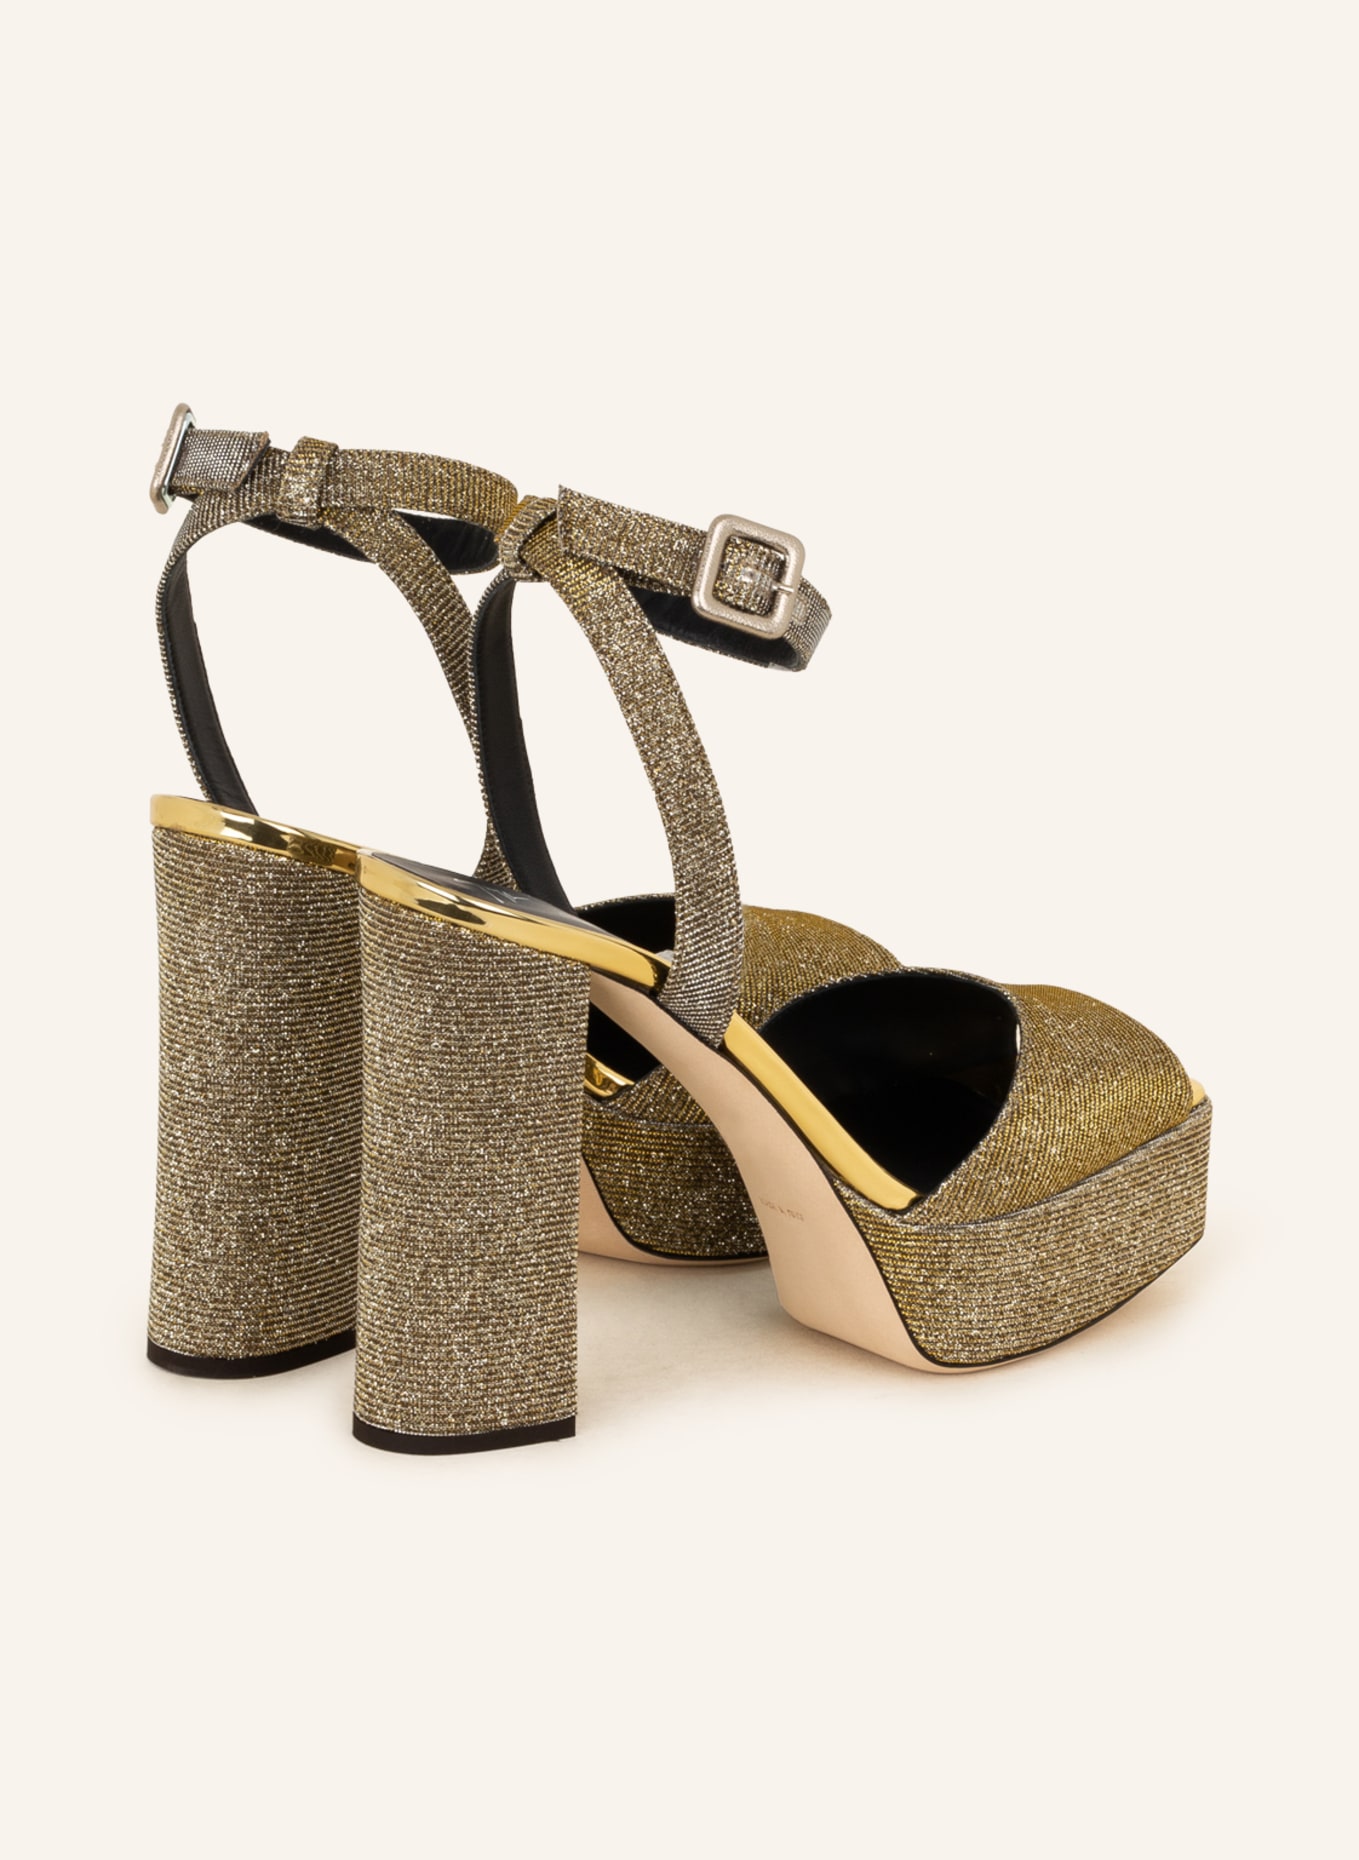 Giuseppe Zanotti Platform sandals - gold-coloured - Zalando.de